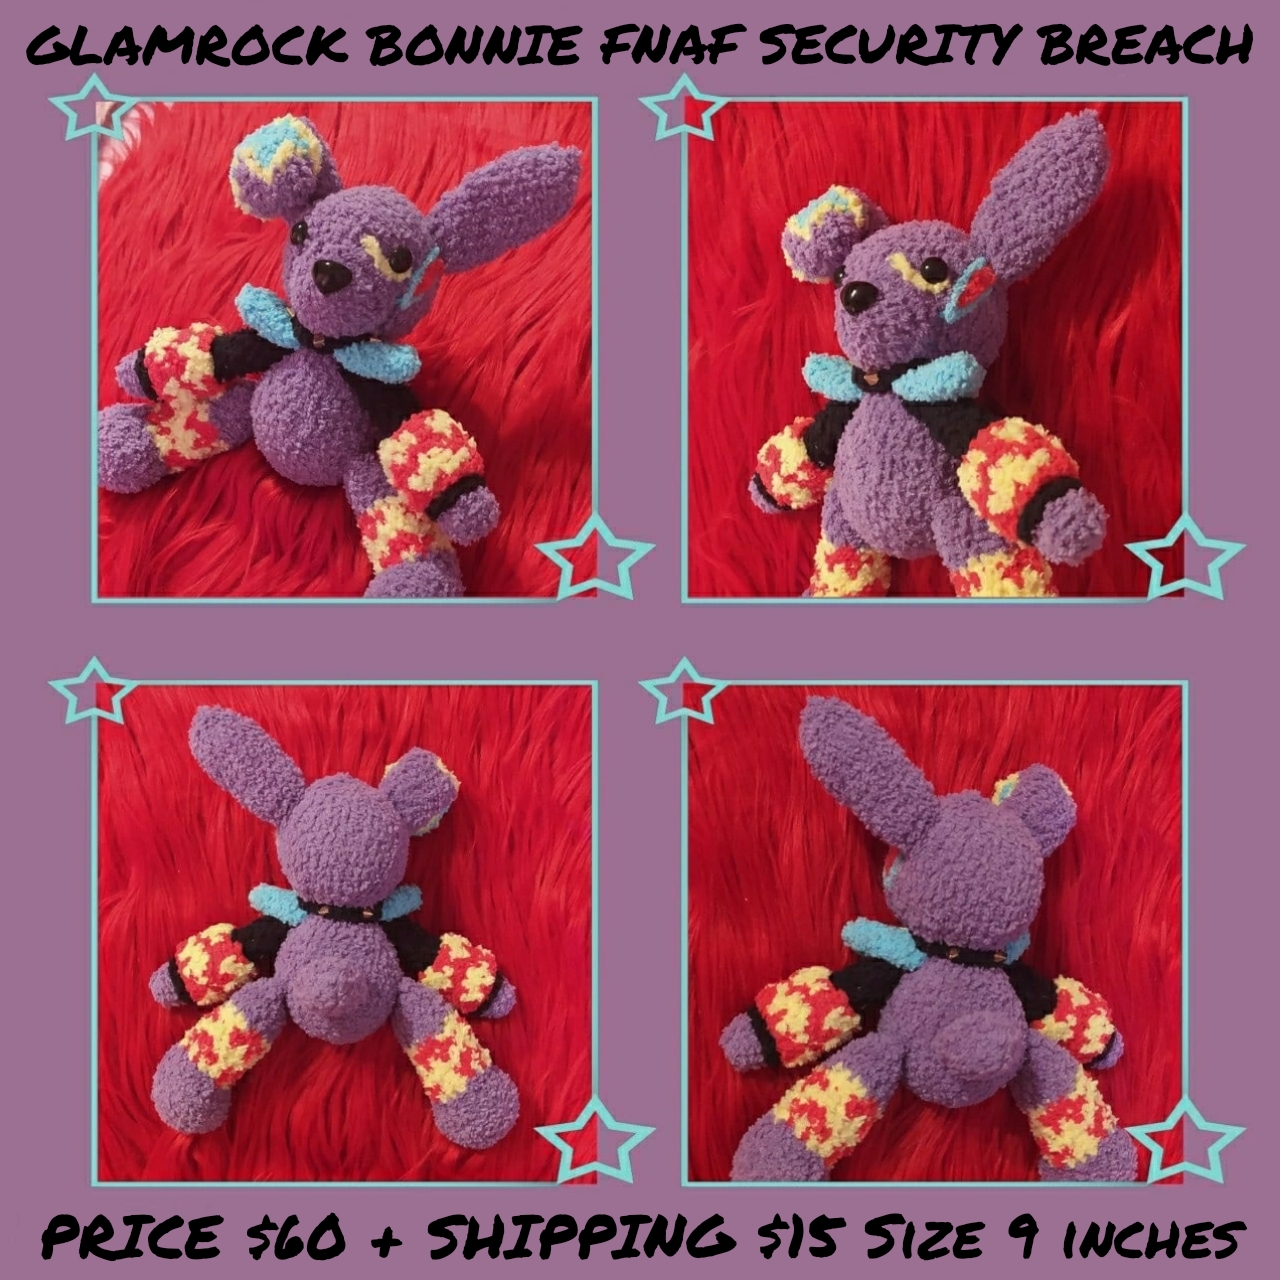 Five Nights at Freddy's - Glamrock Bonnie Plush Toy Buy on